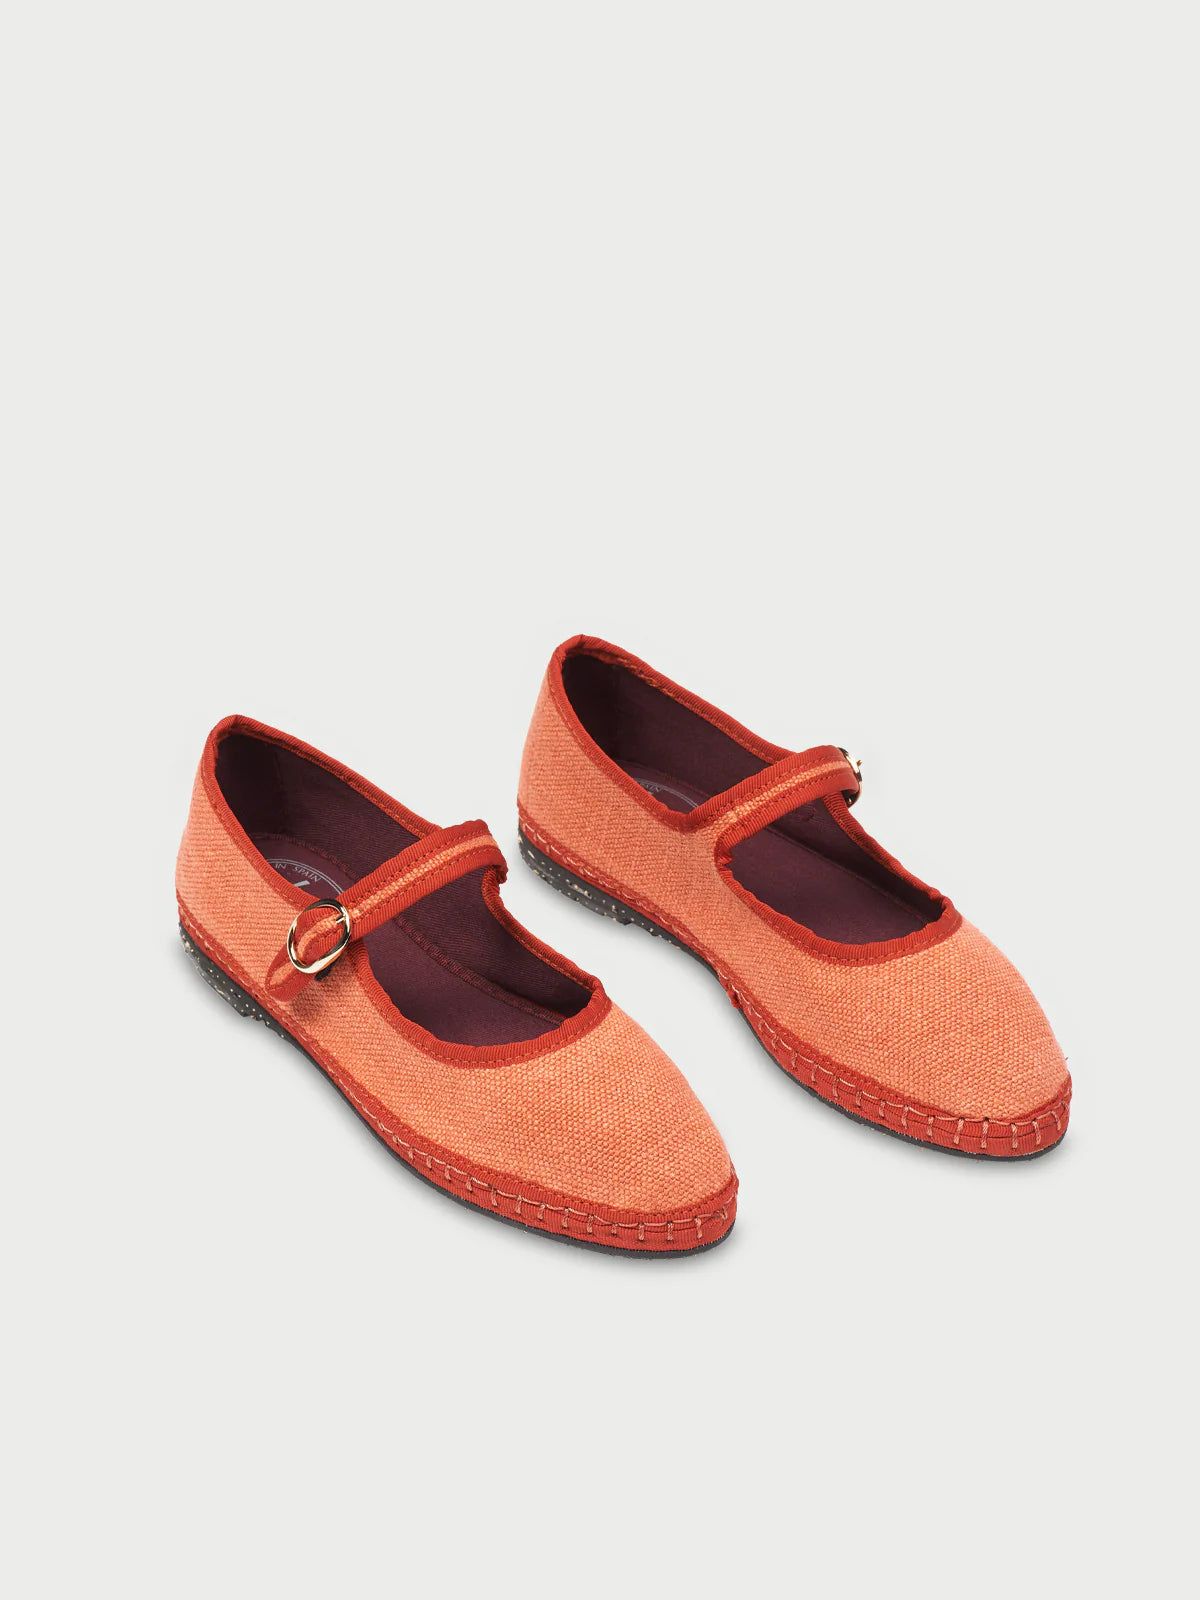 Chaussures Marie Jane orange